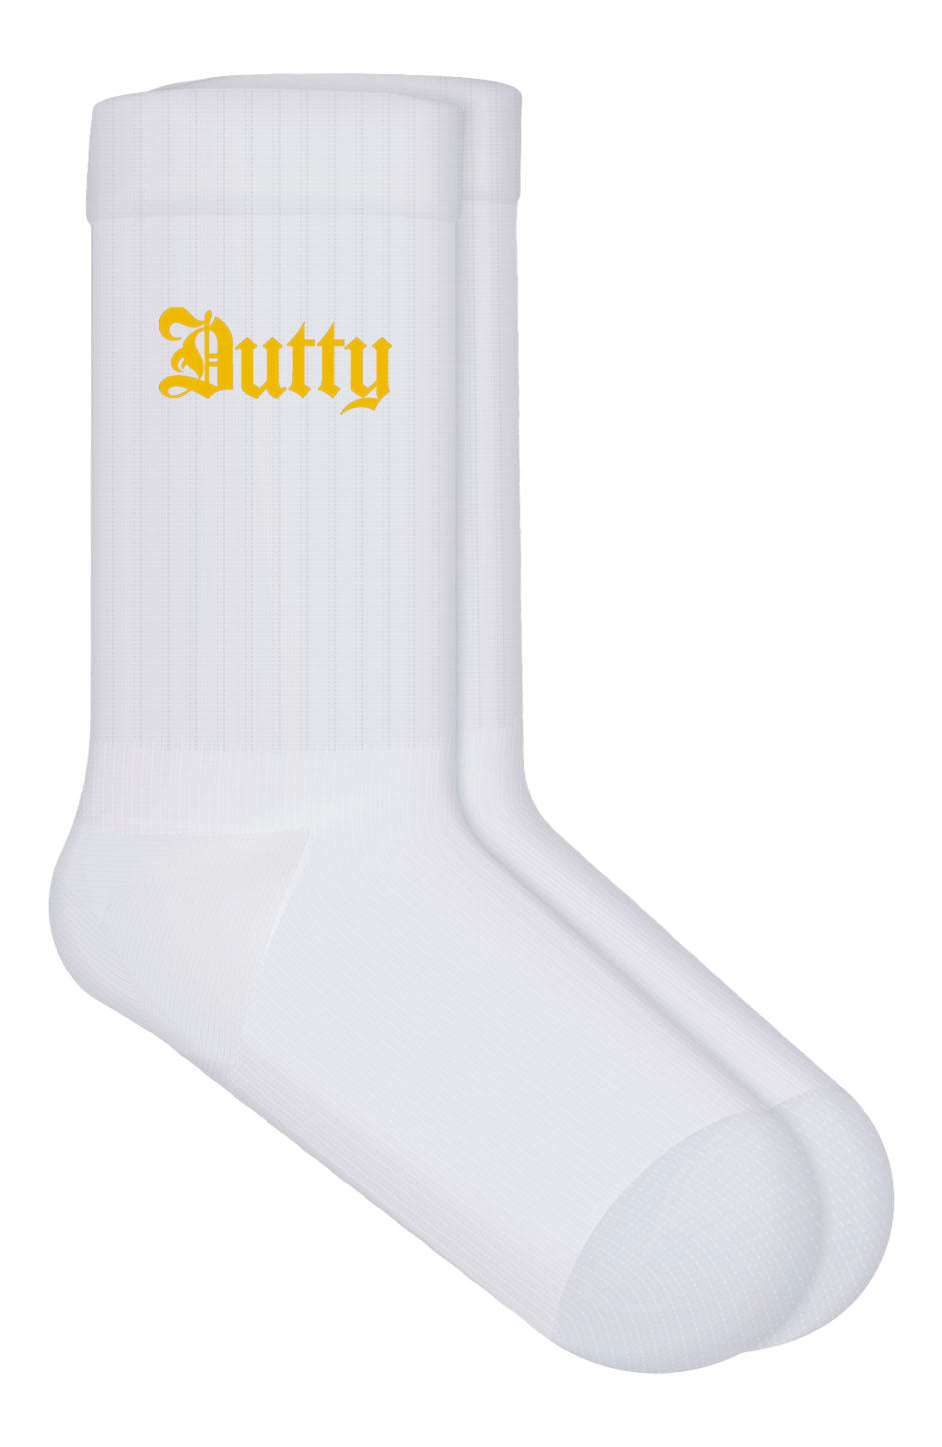 Dutty Socks - Yellow